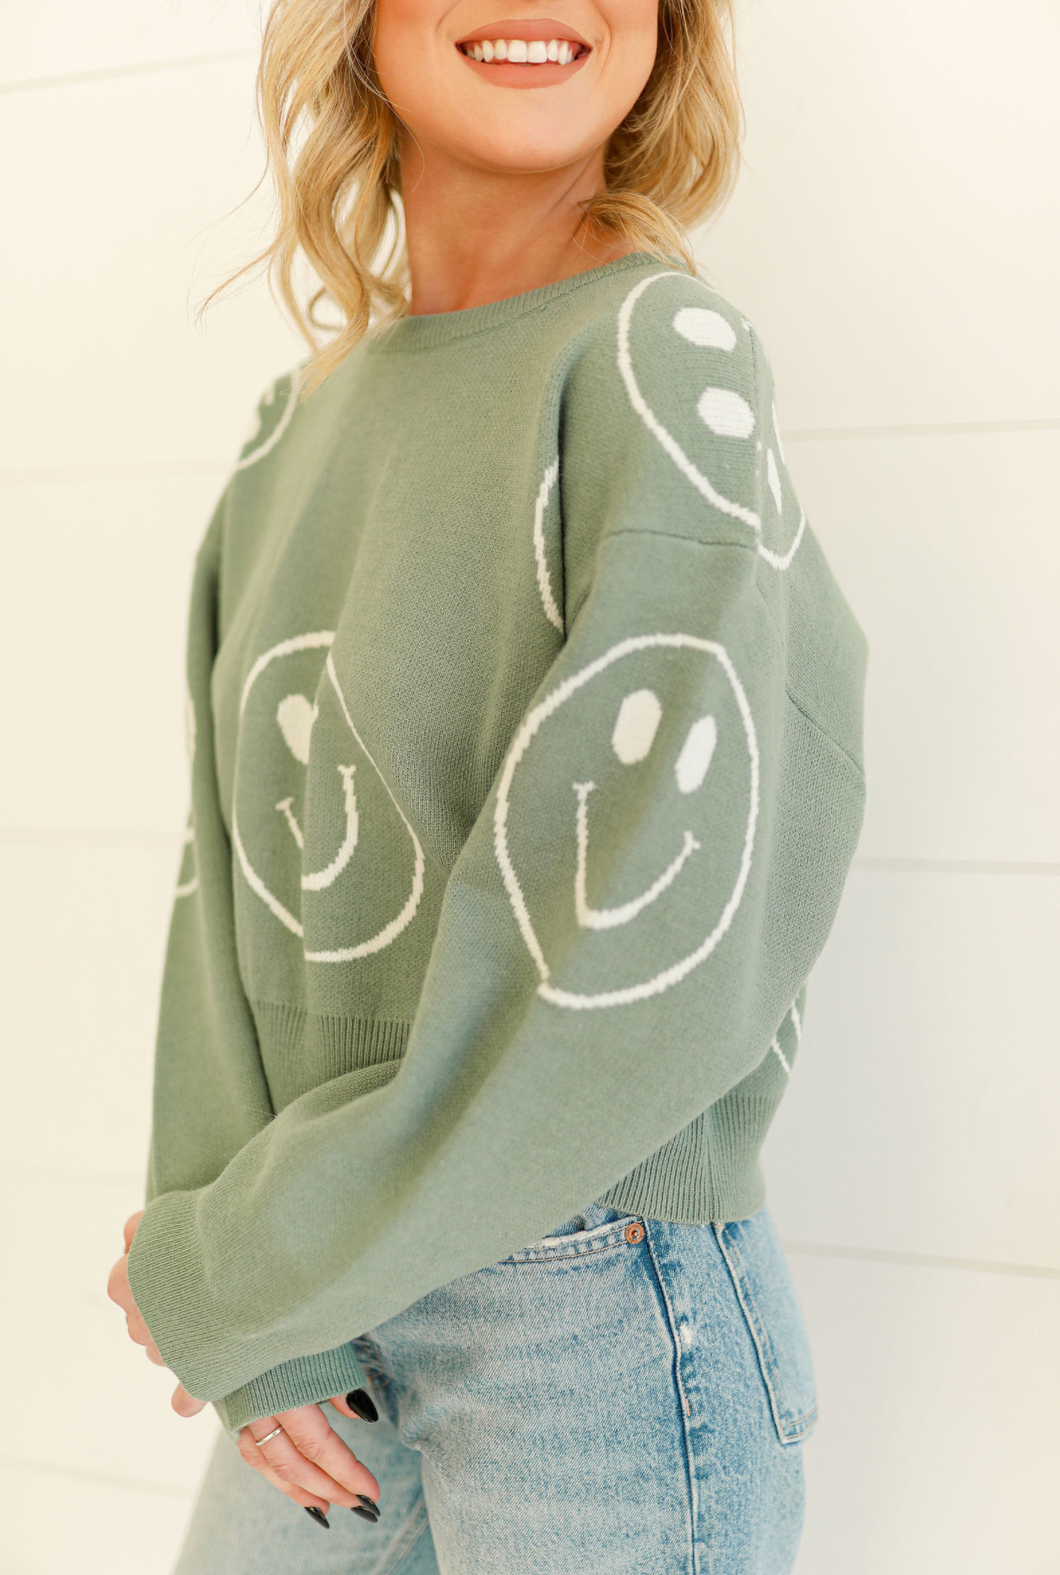 Sage Smiles Sweater